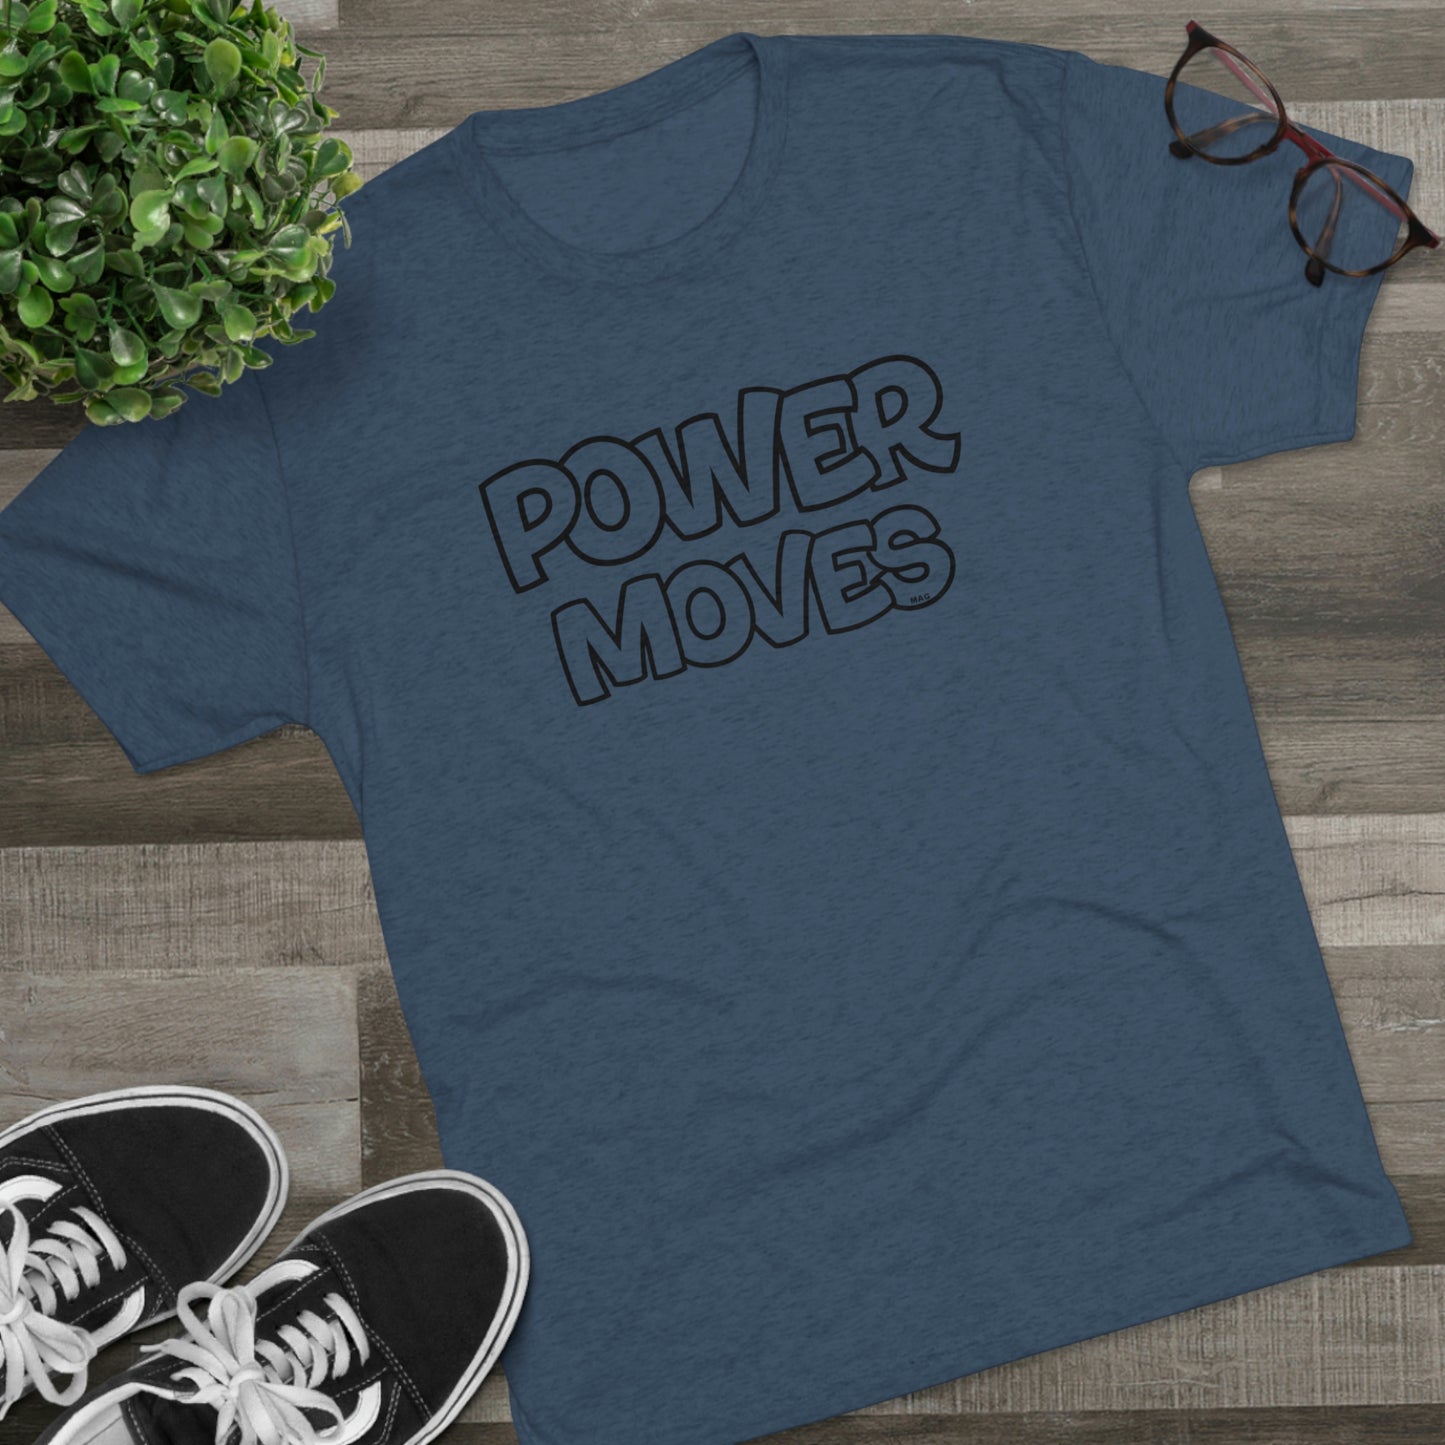 Power Moves - Unisex Tri-Blend Men's Crew Tee